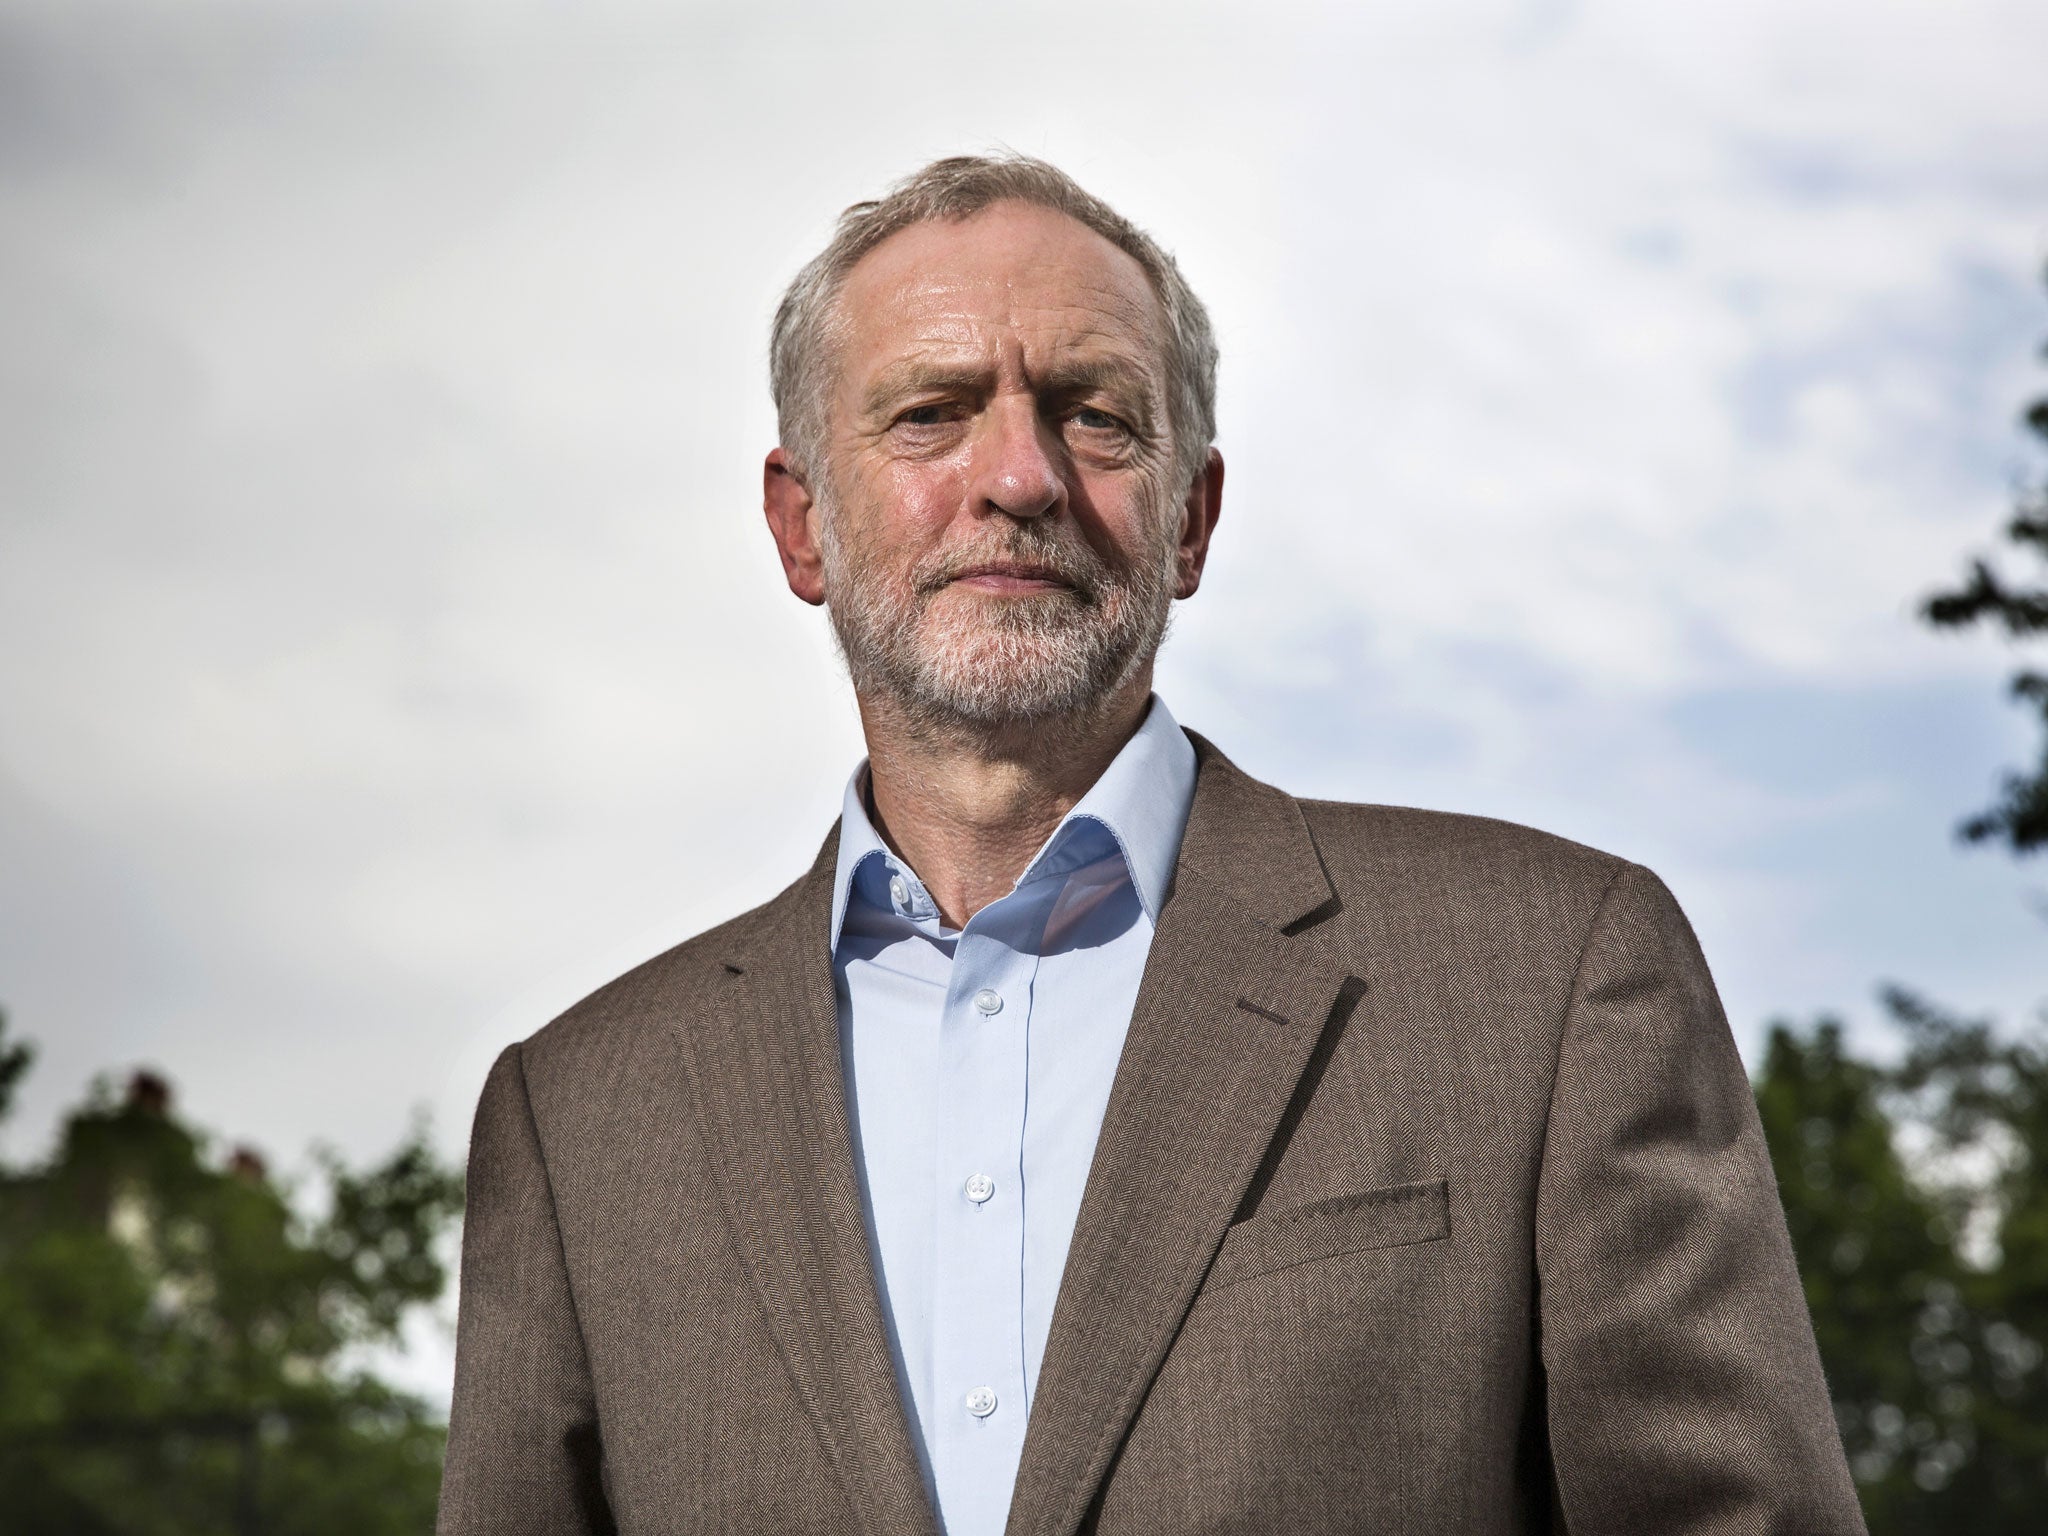 A kind portrait: Labour leader Jeremy Corbyn